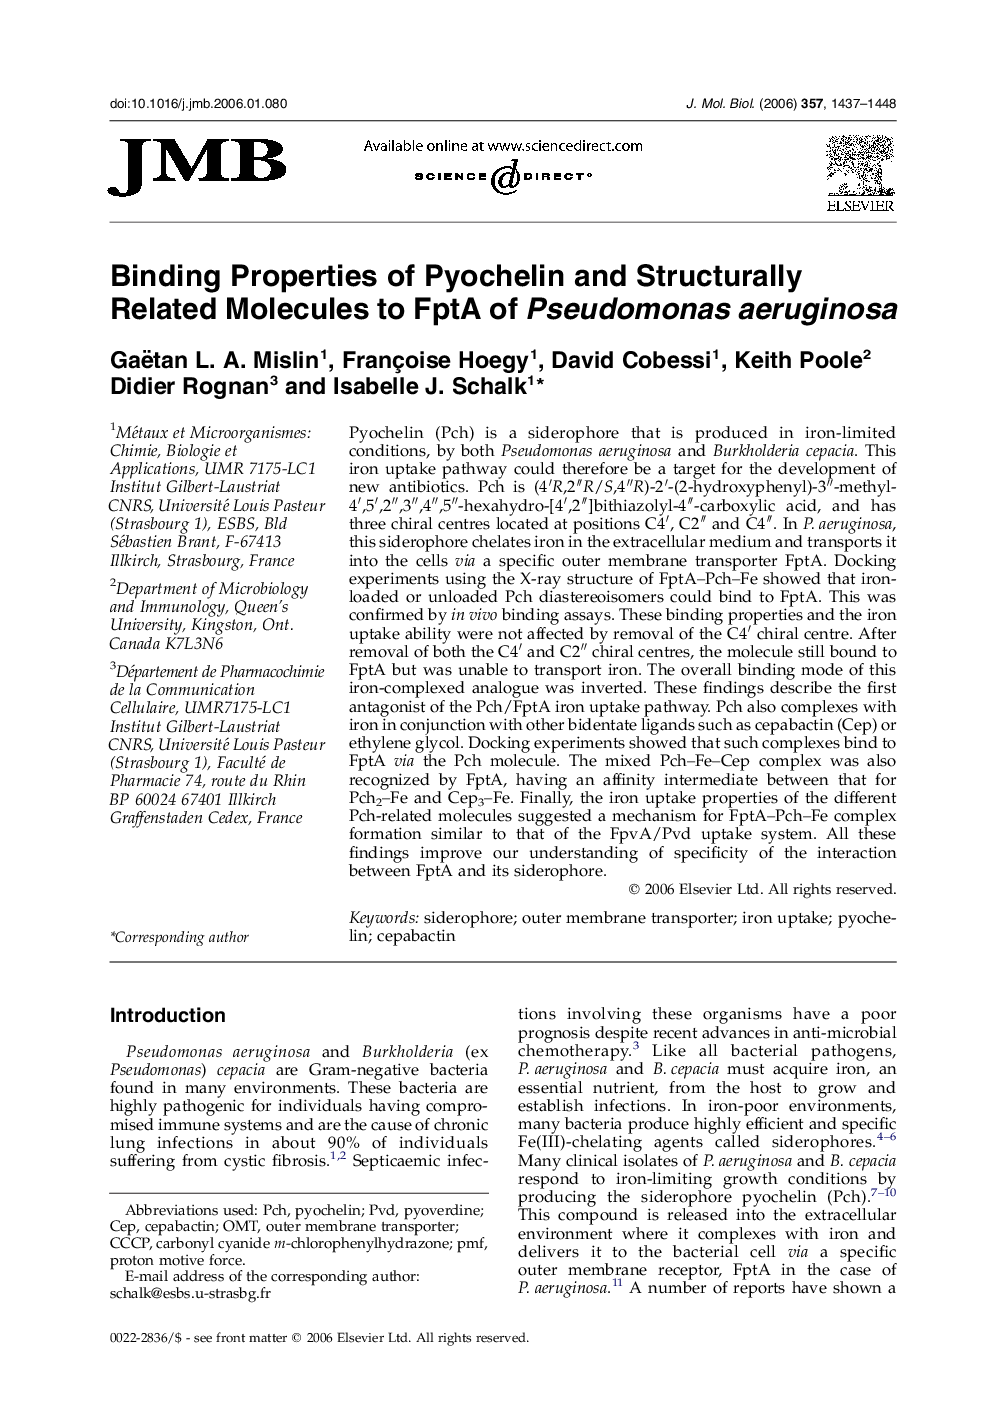 Binding Properties of Pyochelin and Structurally Related Molecules to FptA of Pseudomonas aeruginosa